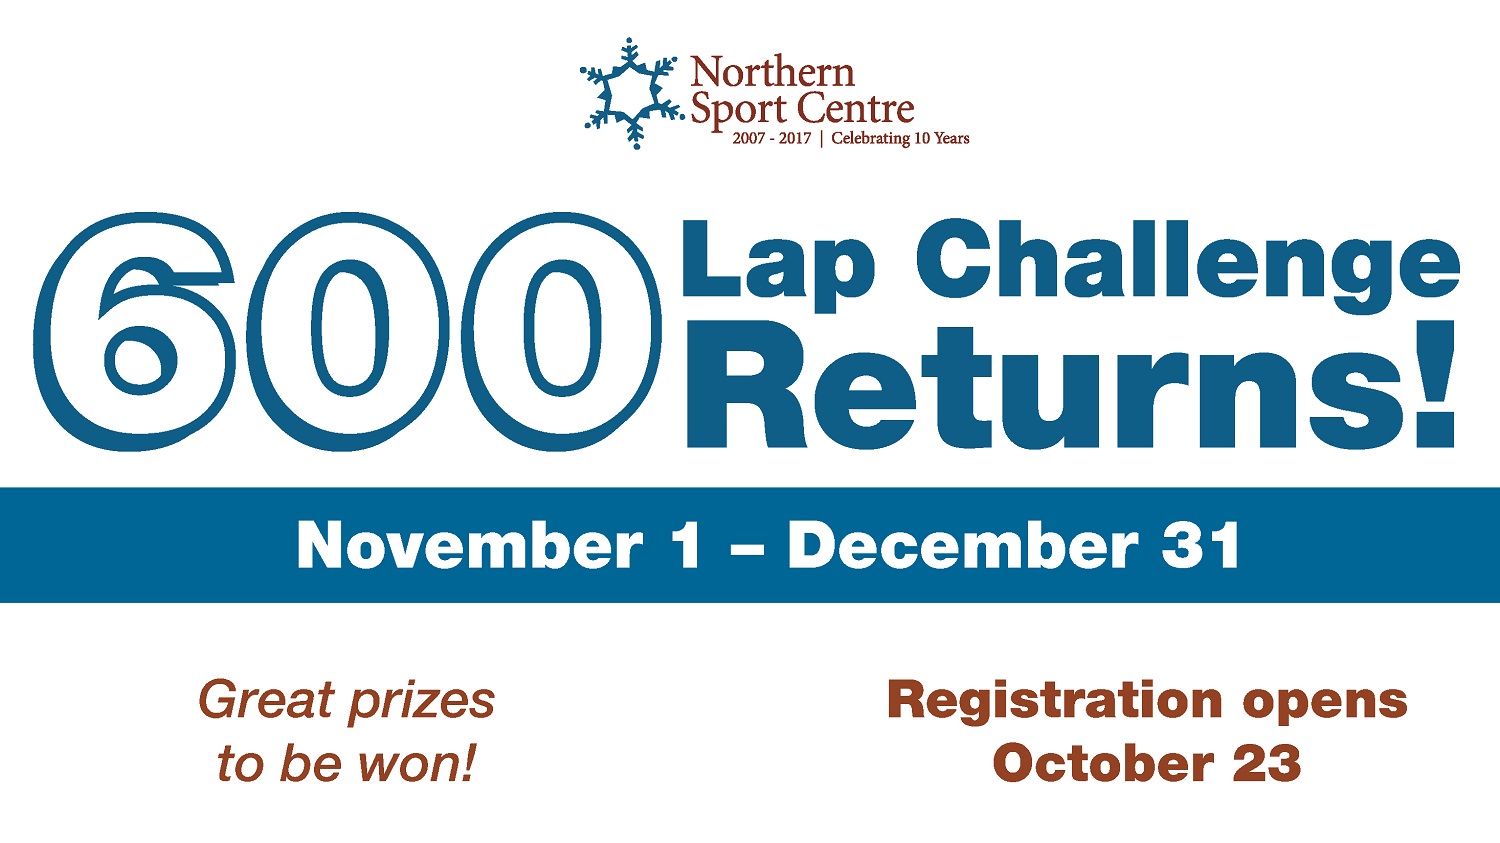 600 Lap Challenge